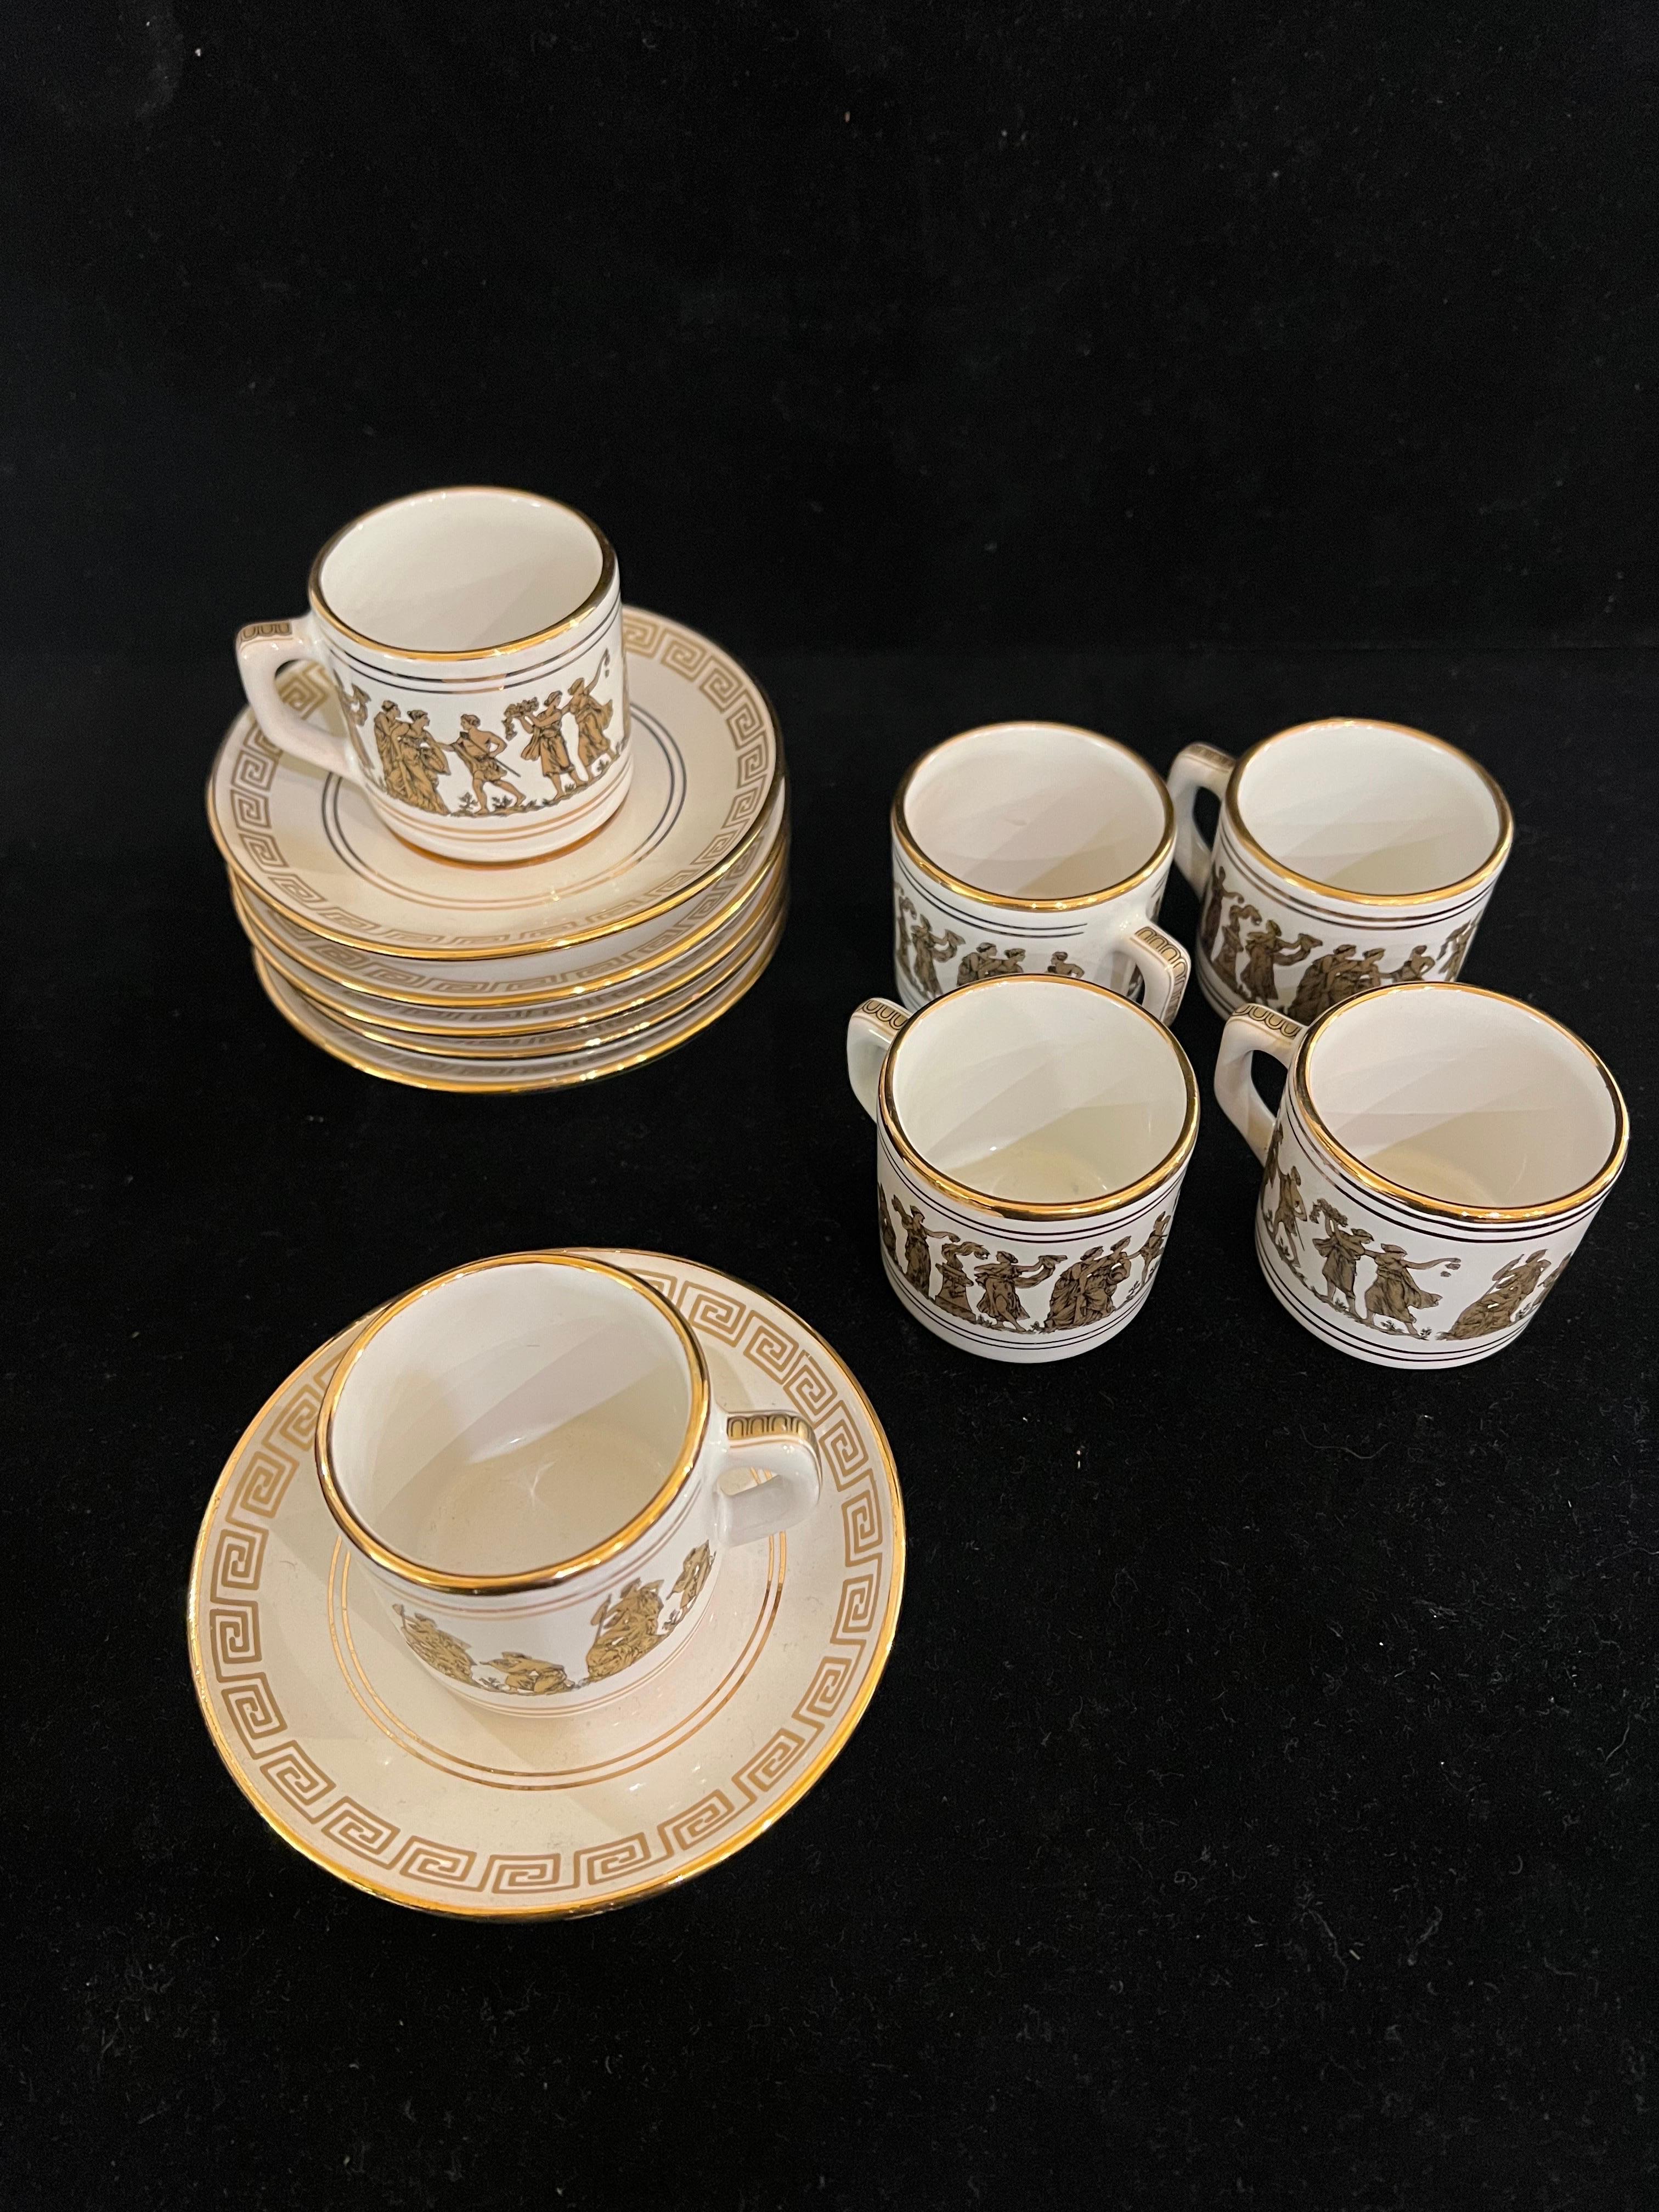 spathas keramik 24k gold